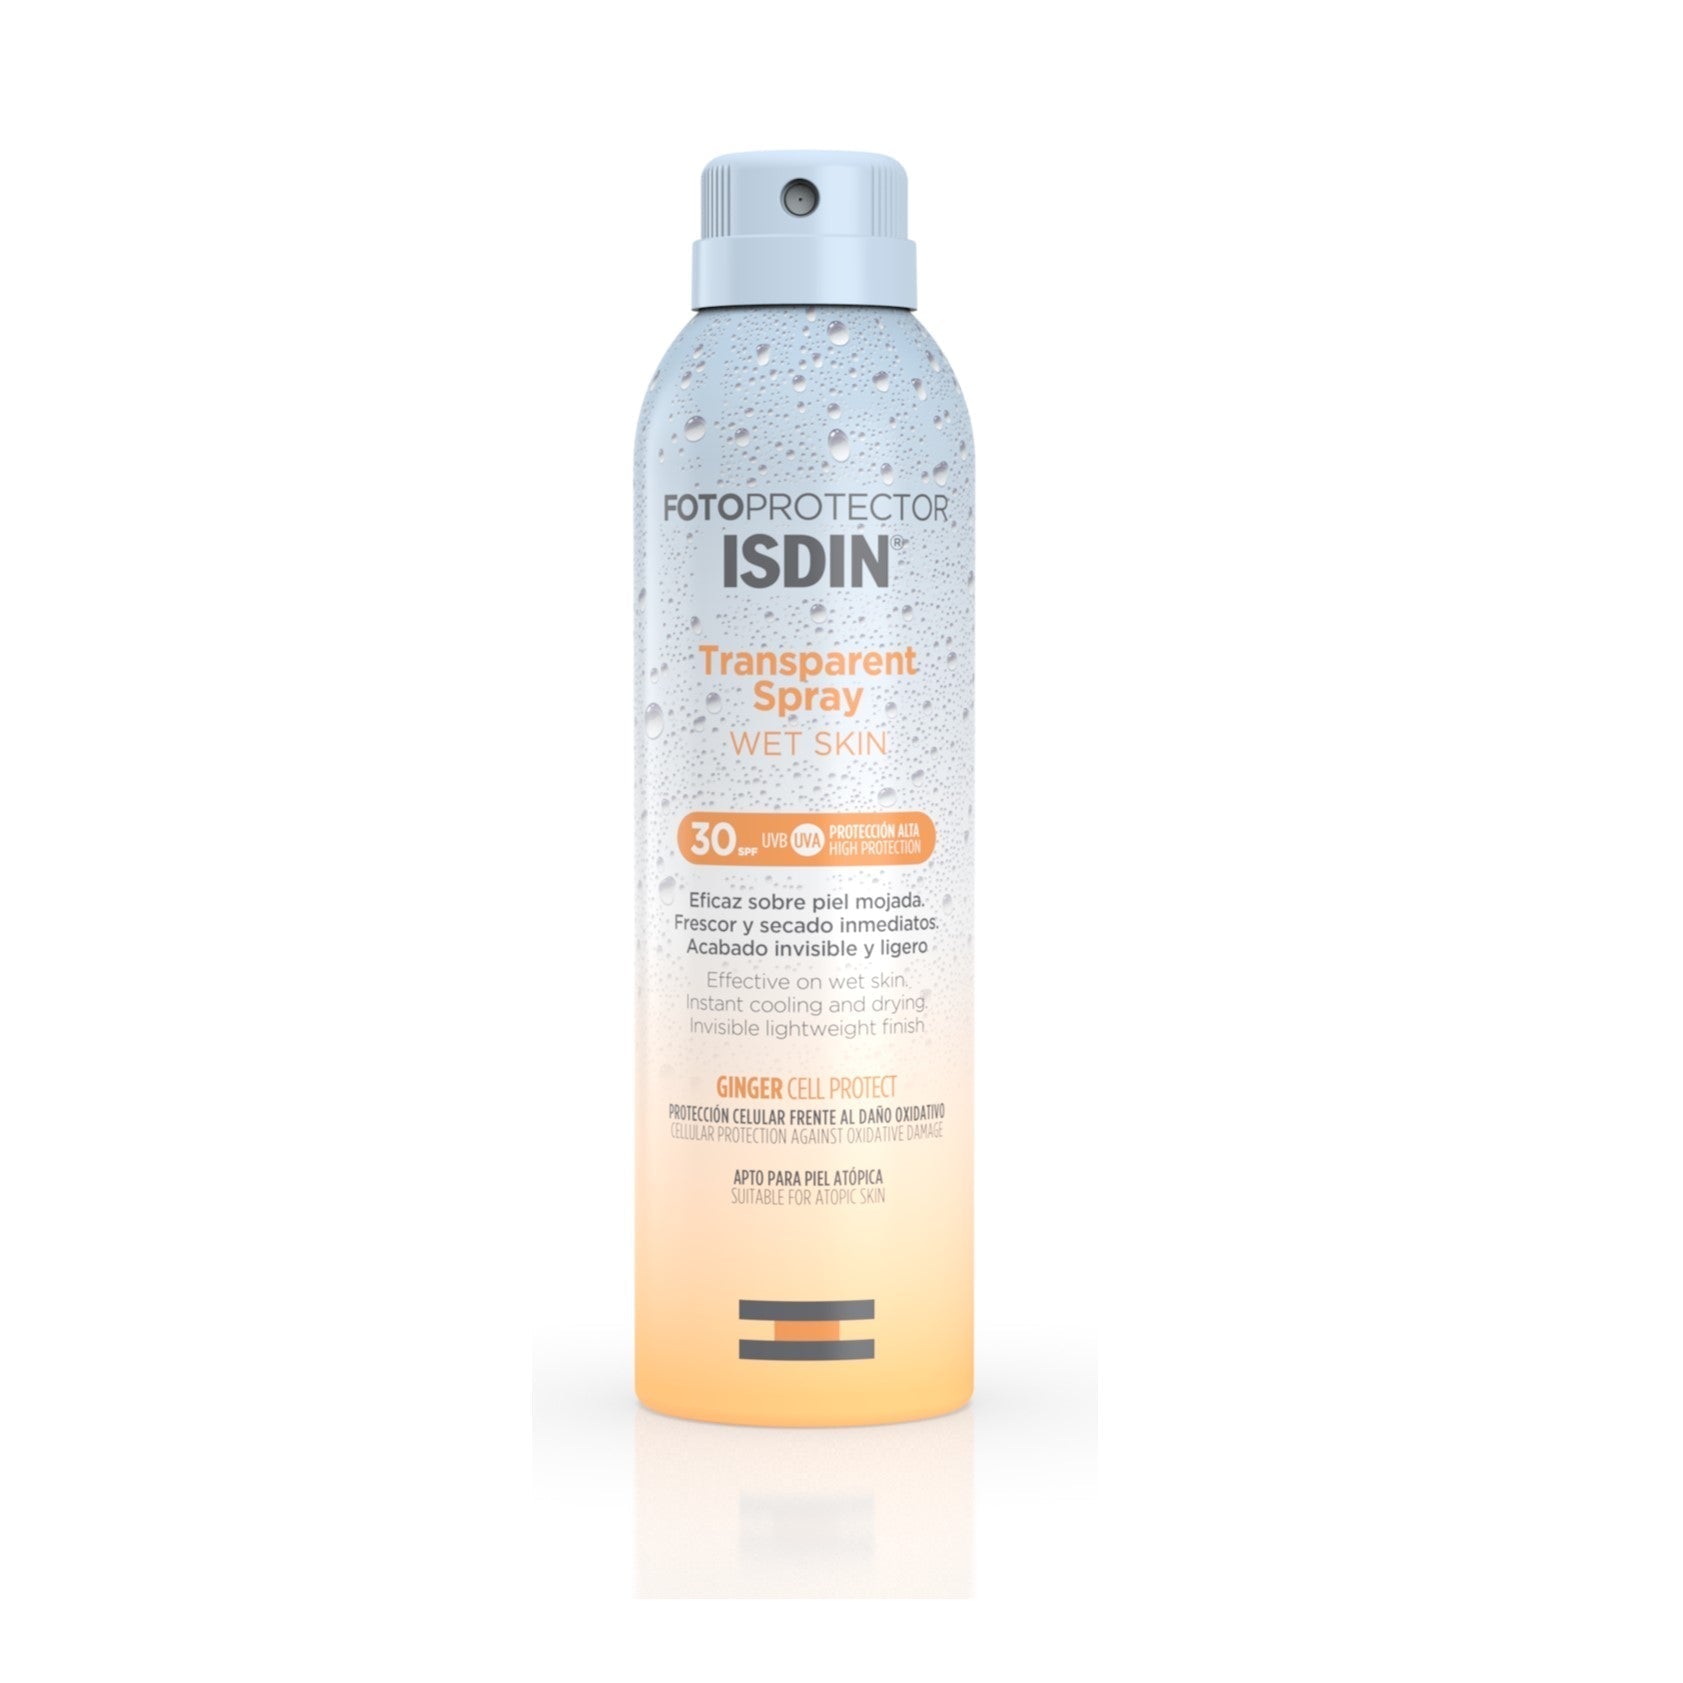 ISDIN Fotoprotector Transparent Spray Wet Skin SPF30 250ml LillysPharmacy.ie